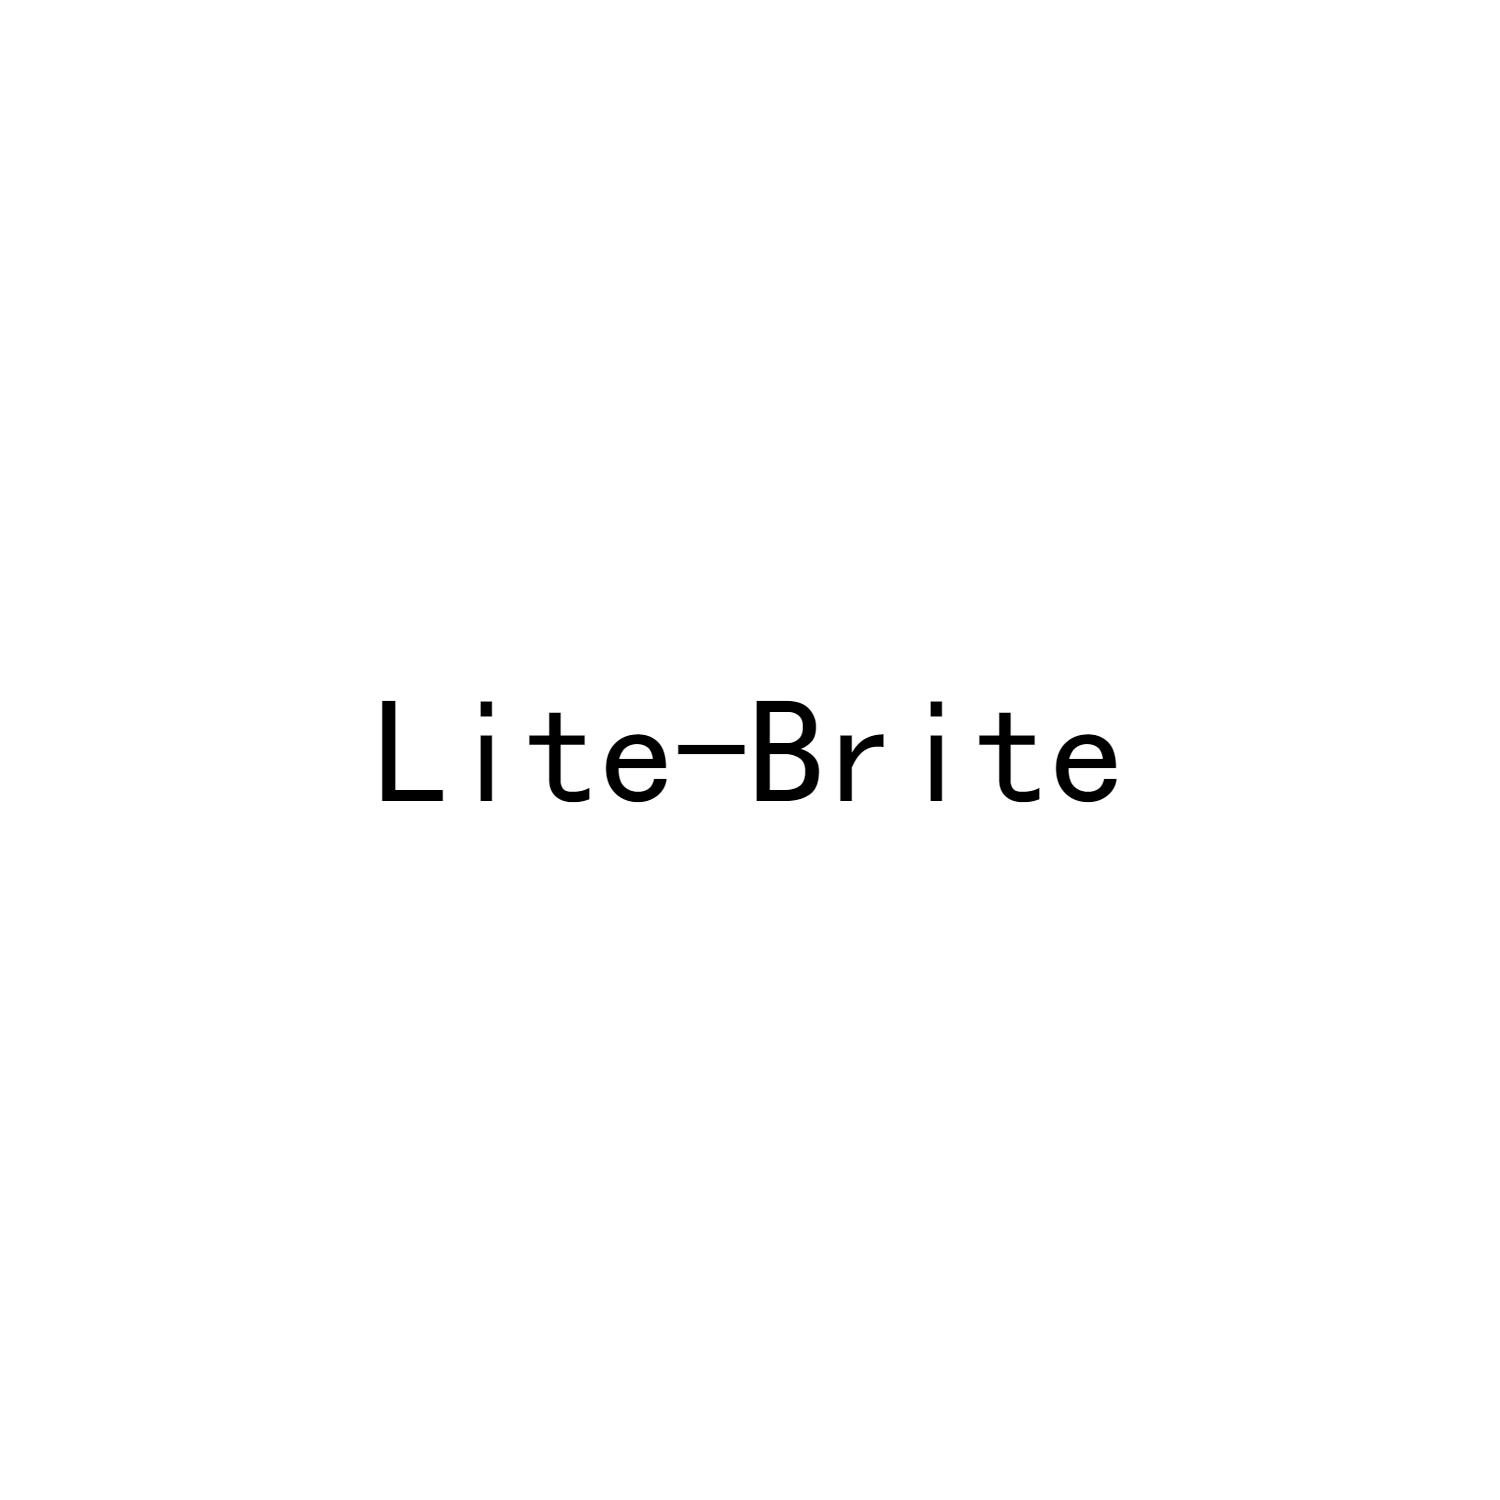 LITE-BRITE